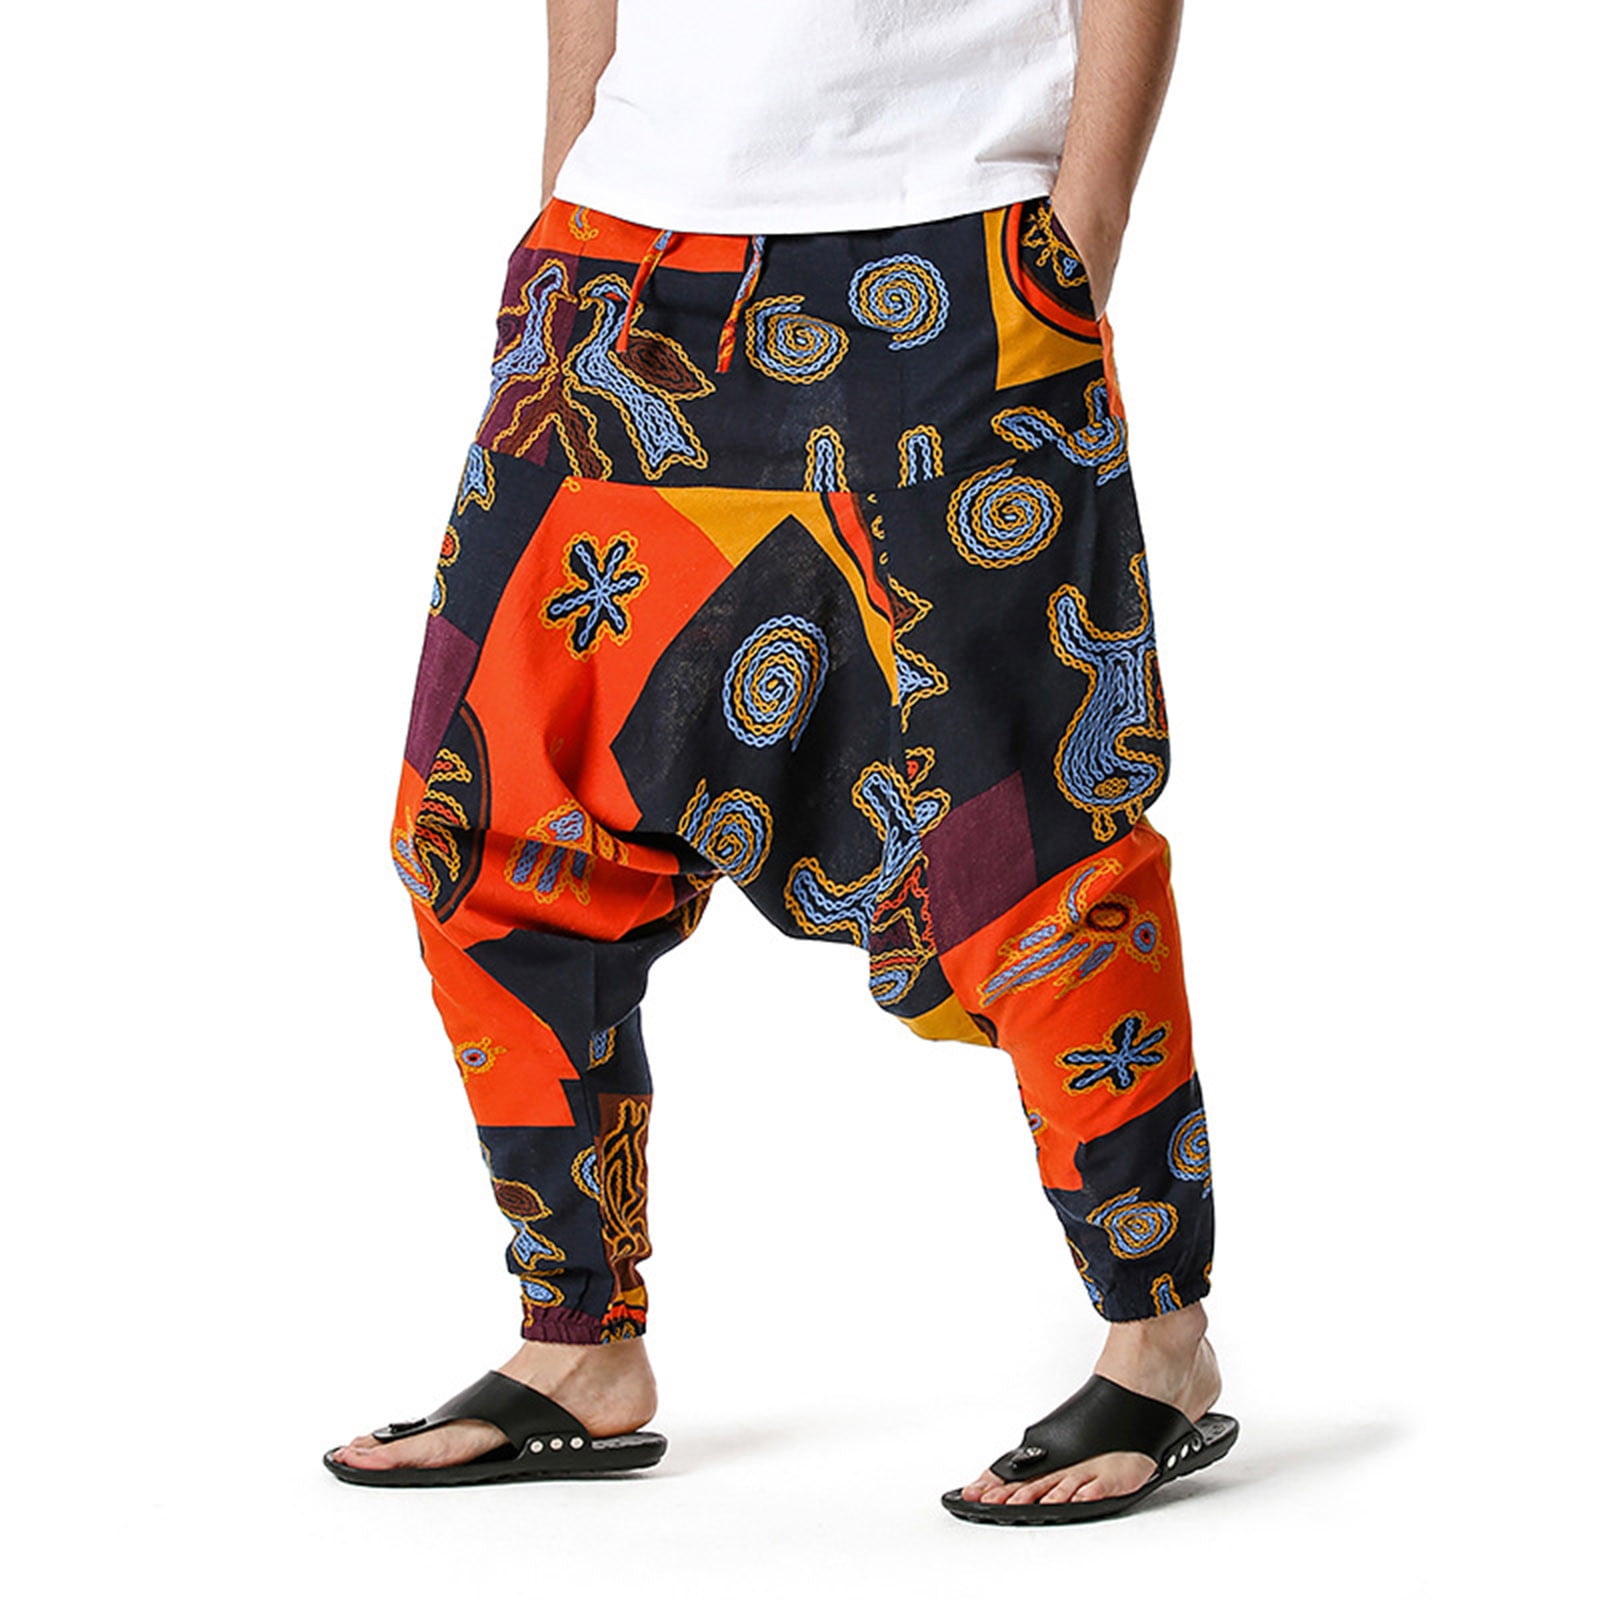 Buy Cigain Men Women Summer Loose Rayon Baggy Hippie Boho Gypsy Bottom Wear Harem  Pants Plus Size (Black) at Amazon.in